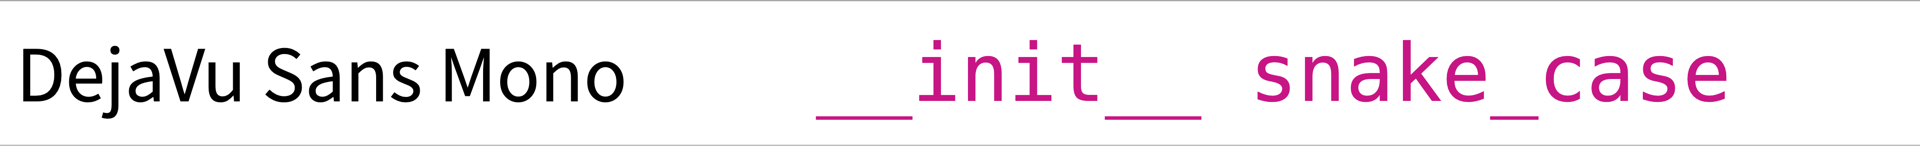 Screenshot of DejaVu Sans Mono showing the string "__init__ snake_case"